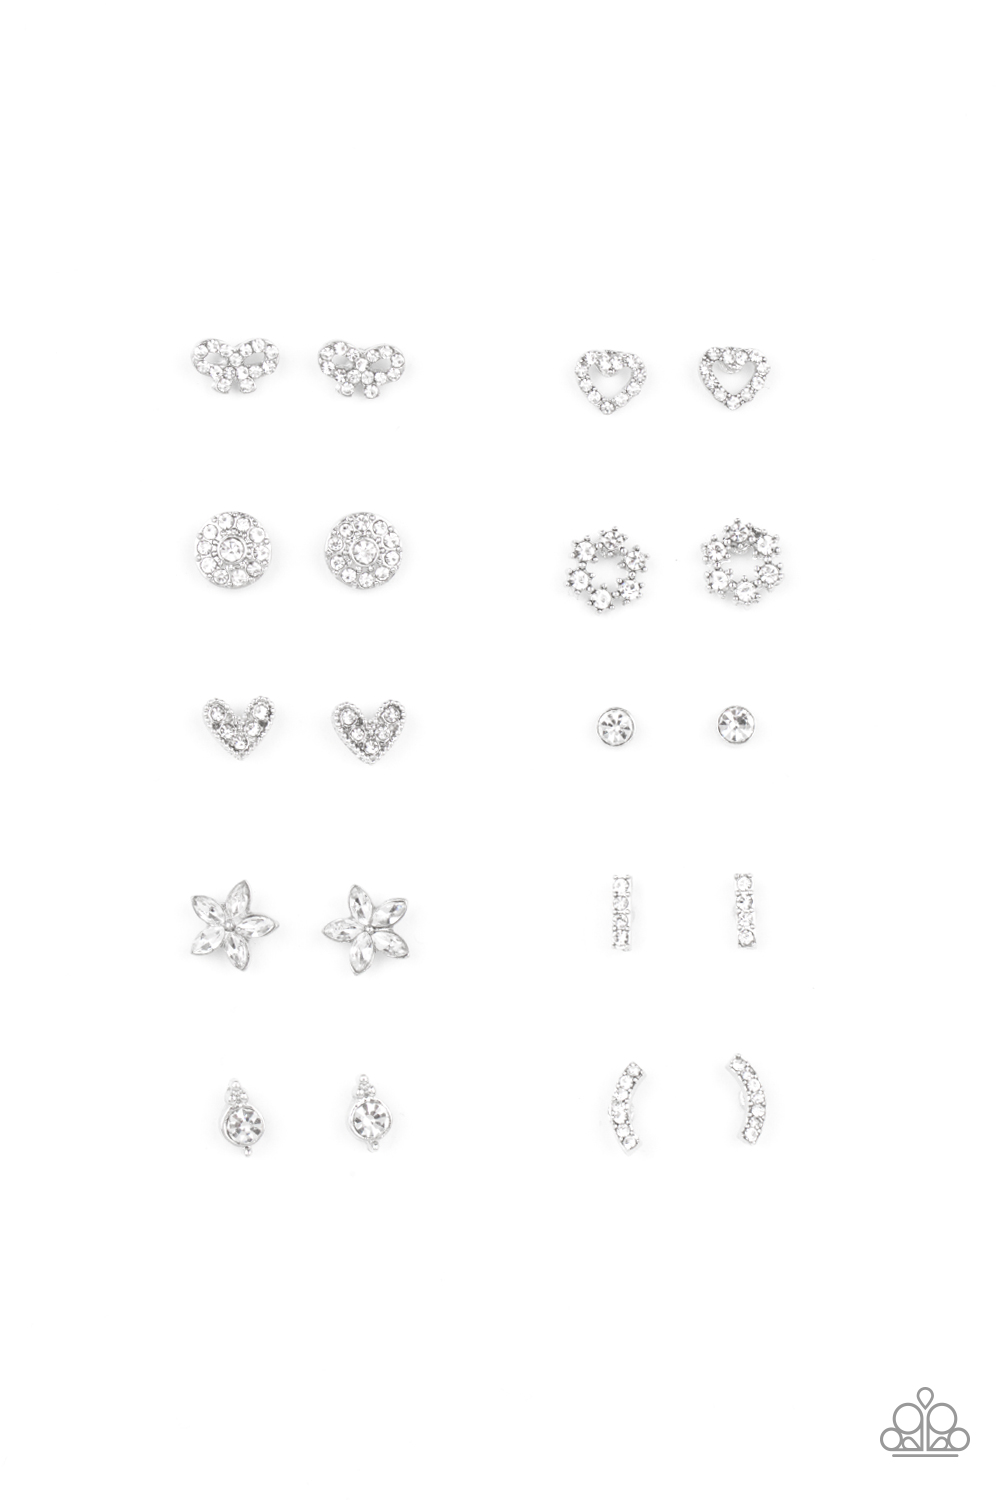 Dainty White Rhinestone Earrings (4436)